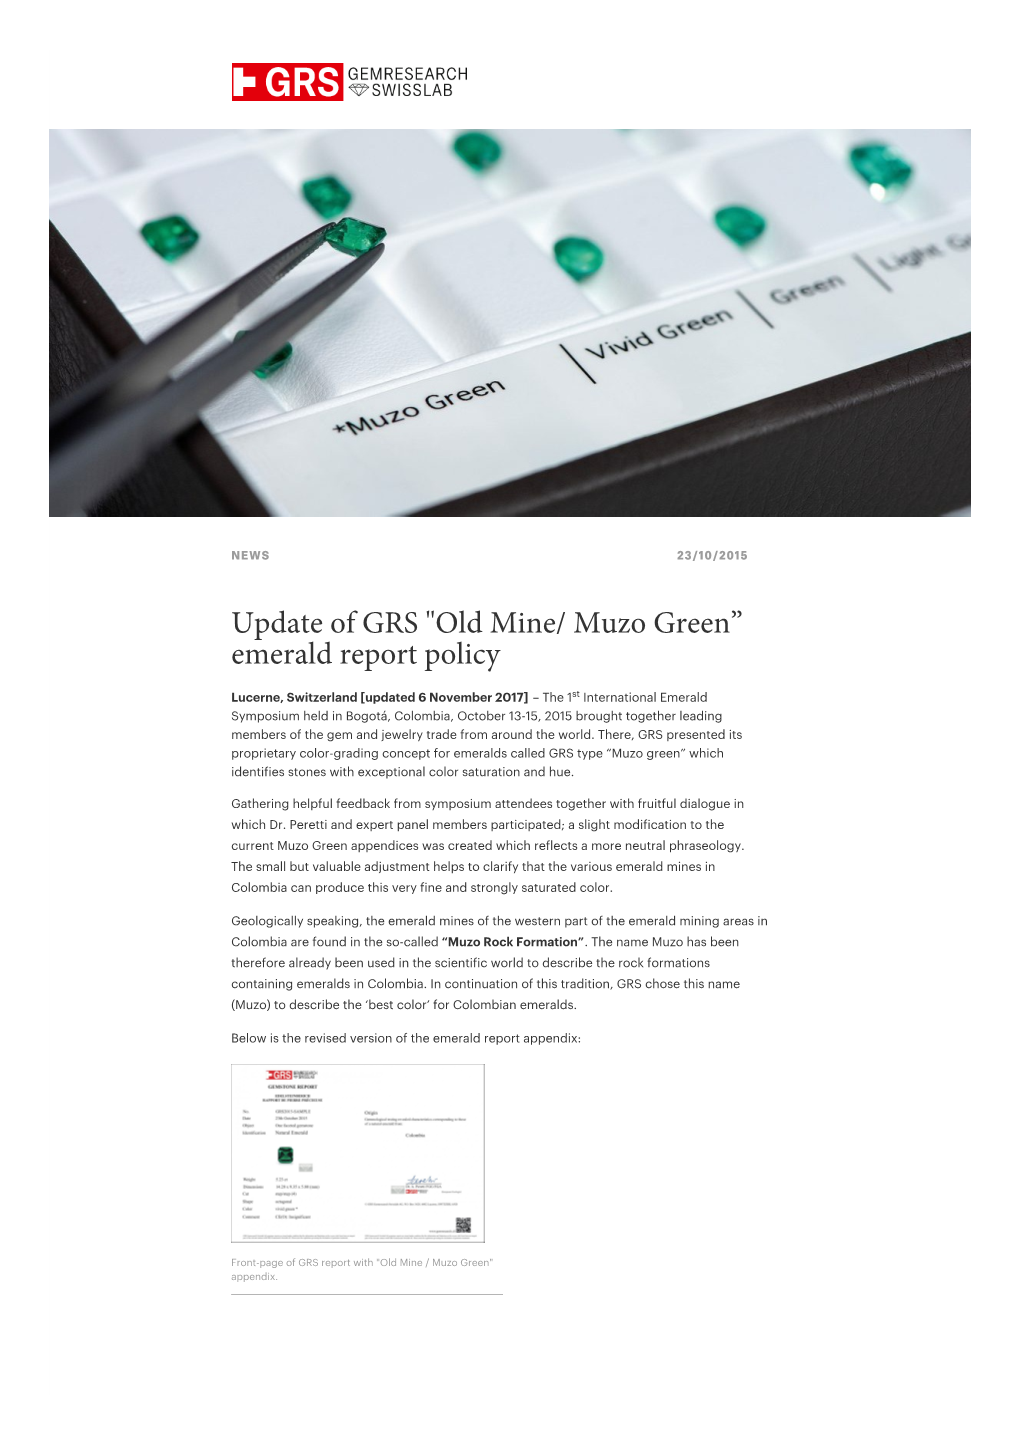 Old Mine/ Muzo Green” Emerald Report Policy